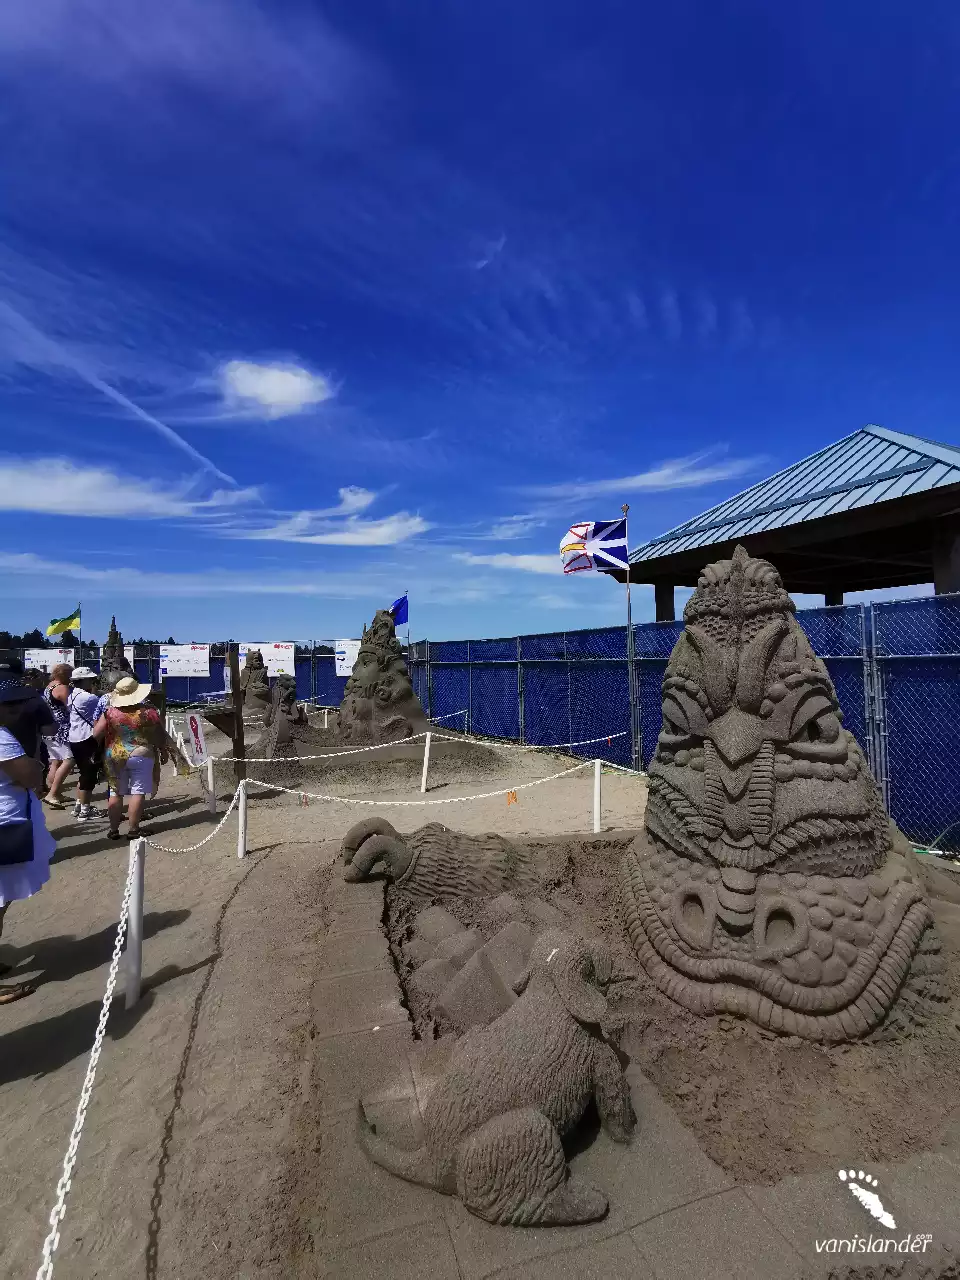 Myths craved on Sand - Parksville Festival, Vancouver Island